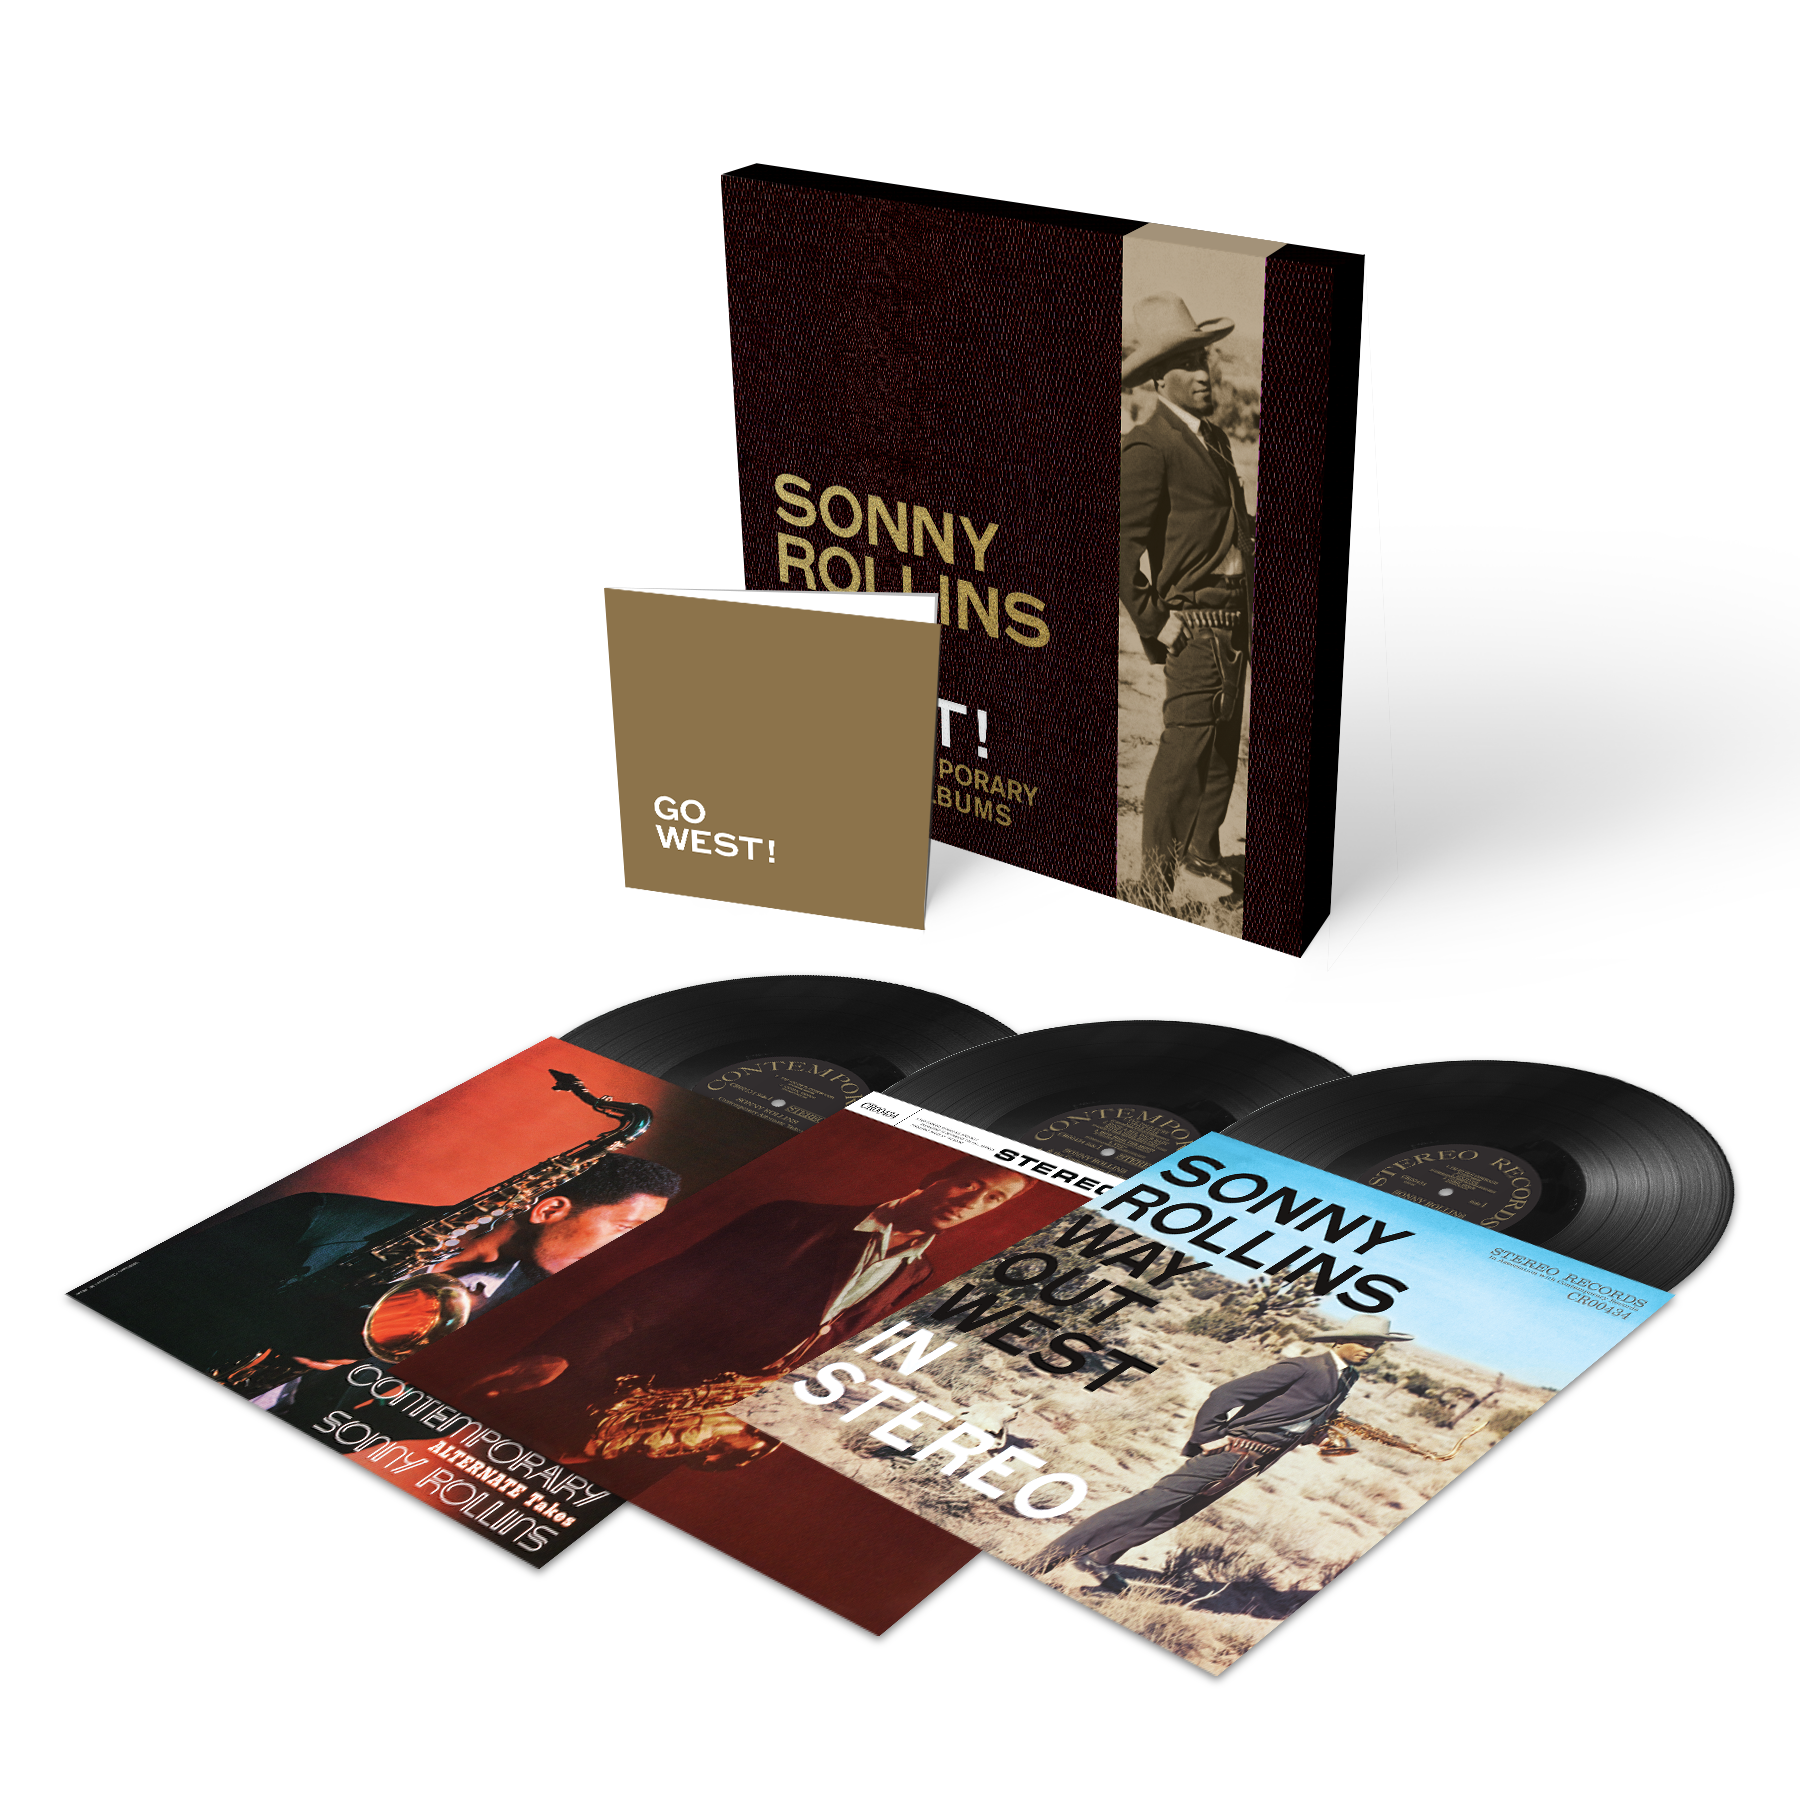 Go West! The Contemporary Records Albums (180g – 3-LP Box Set)